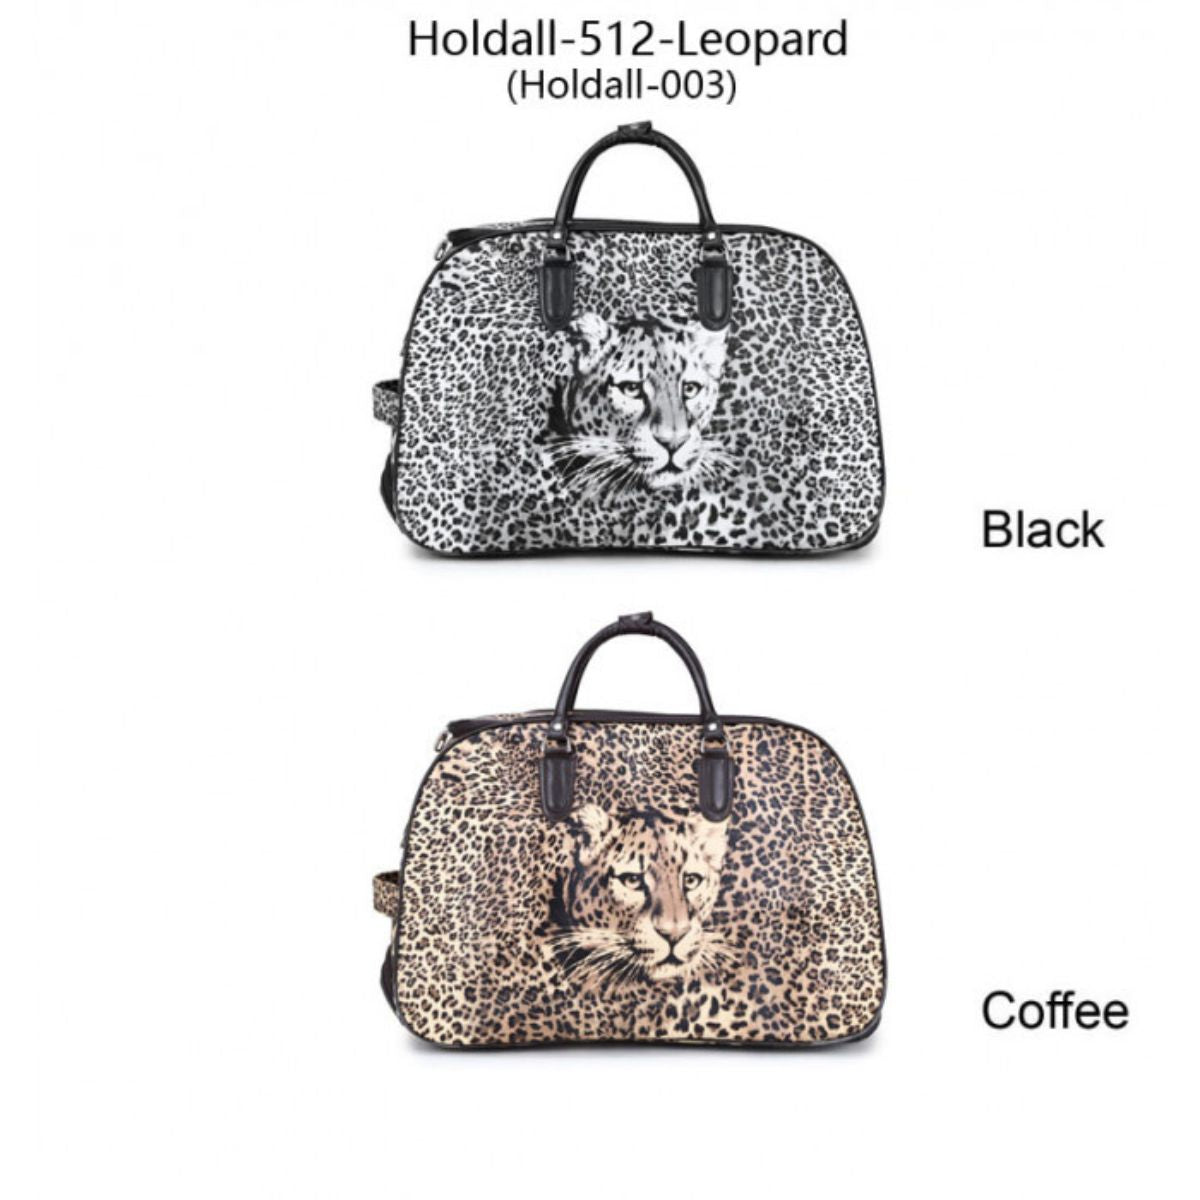 Craze London Holdall-512-Leopard